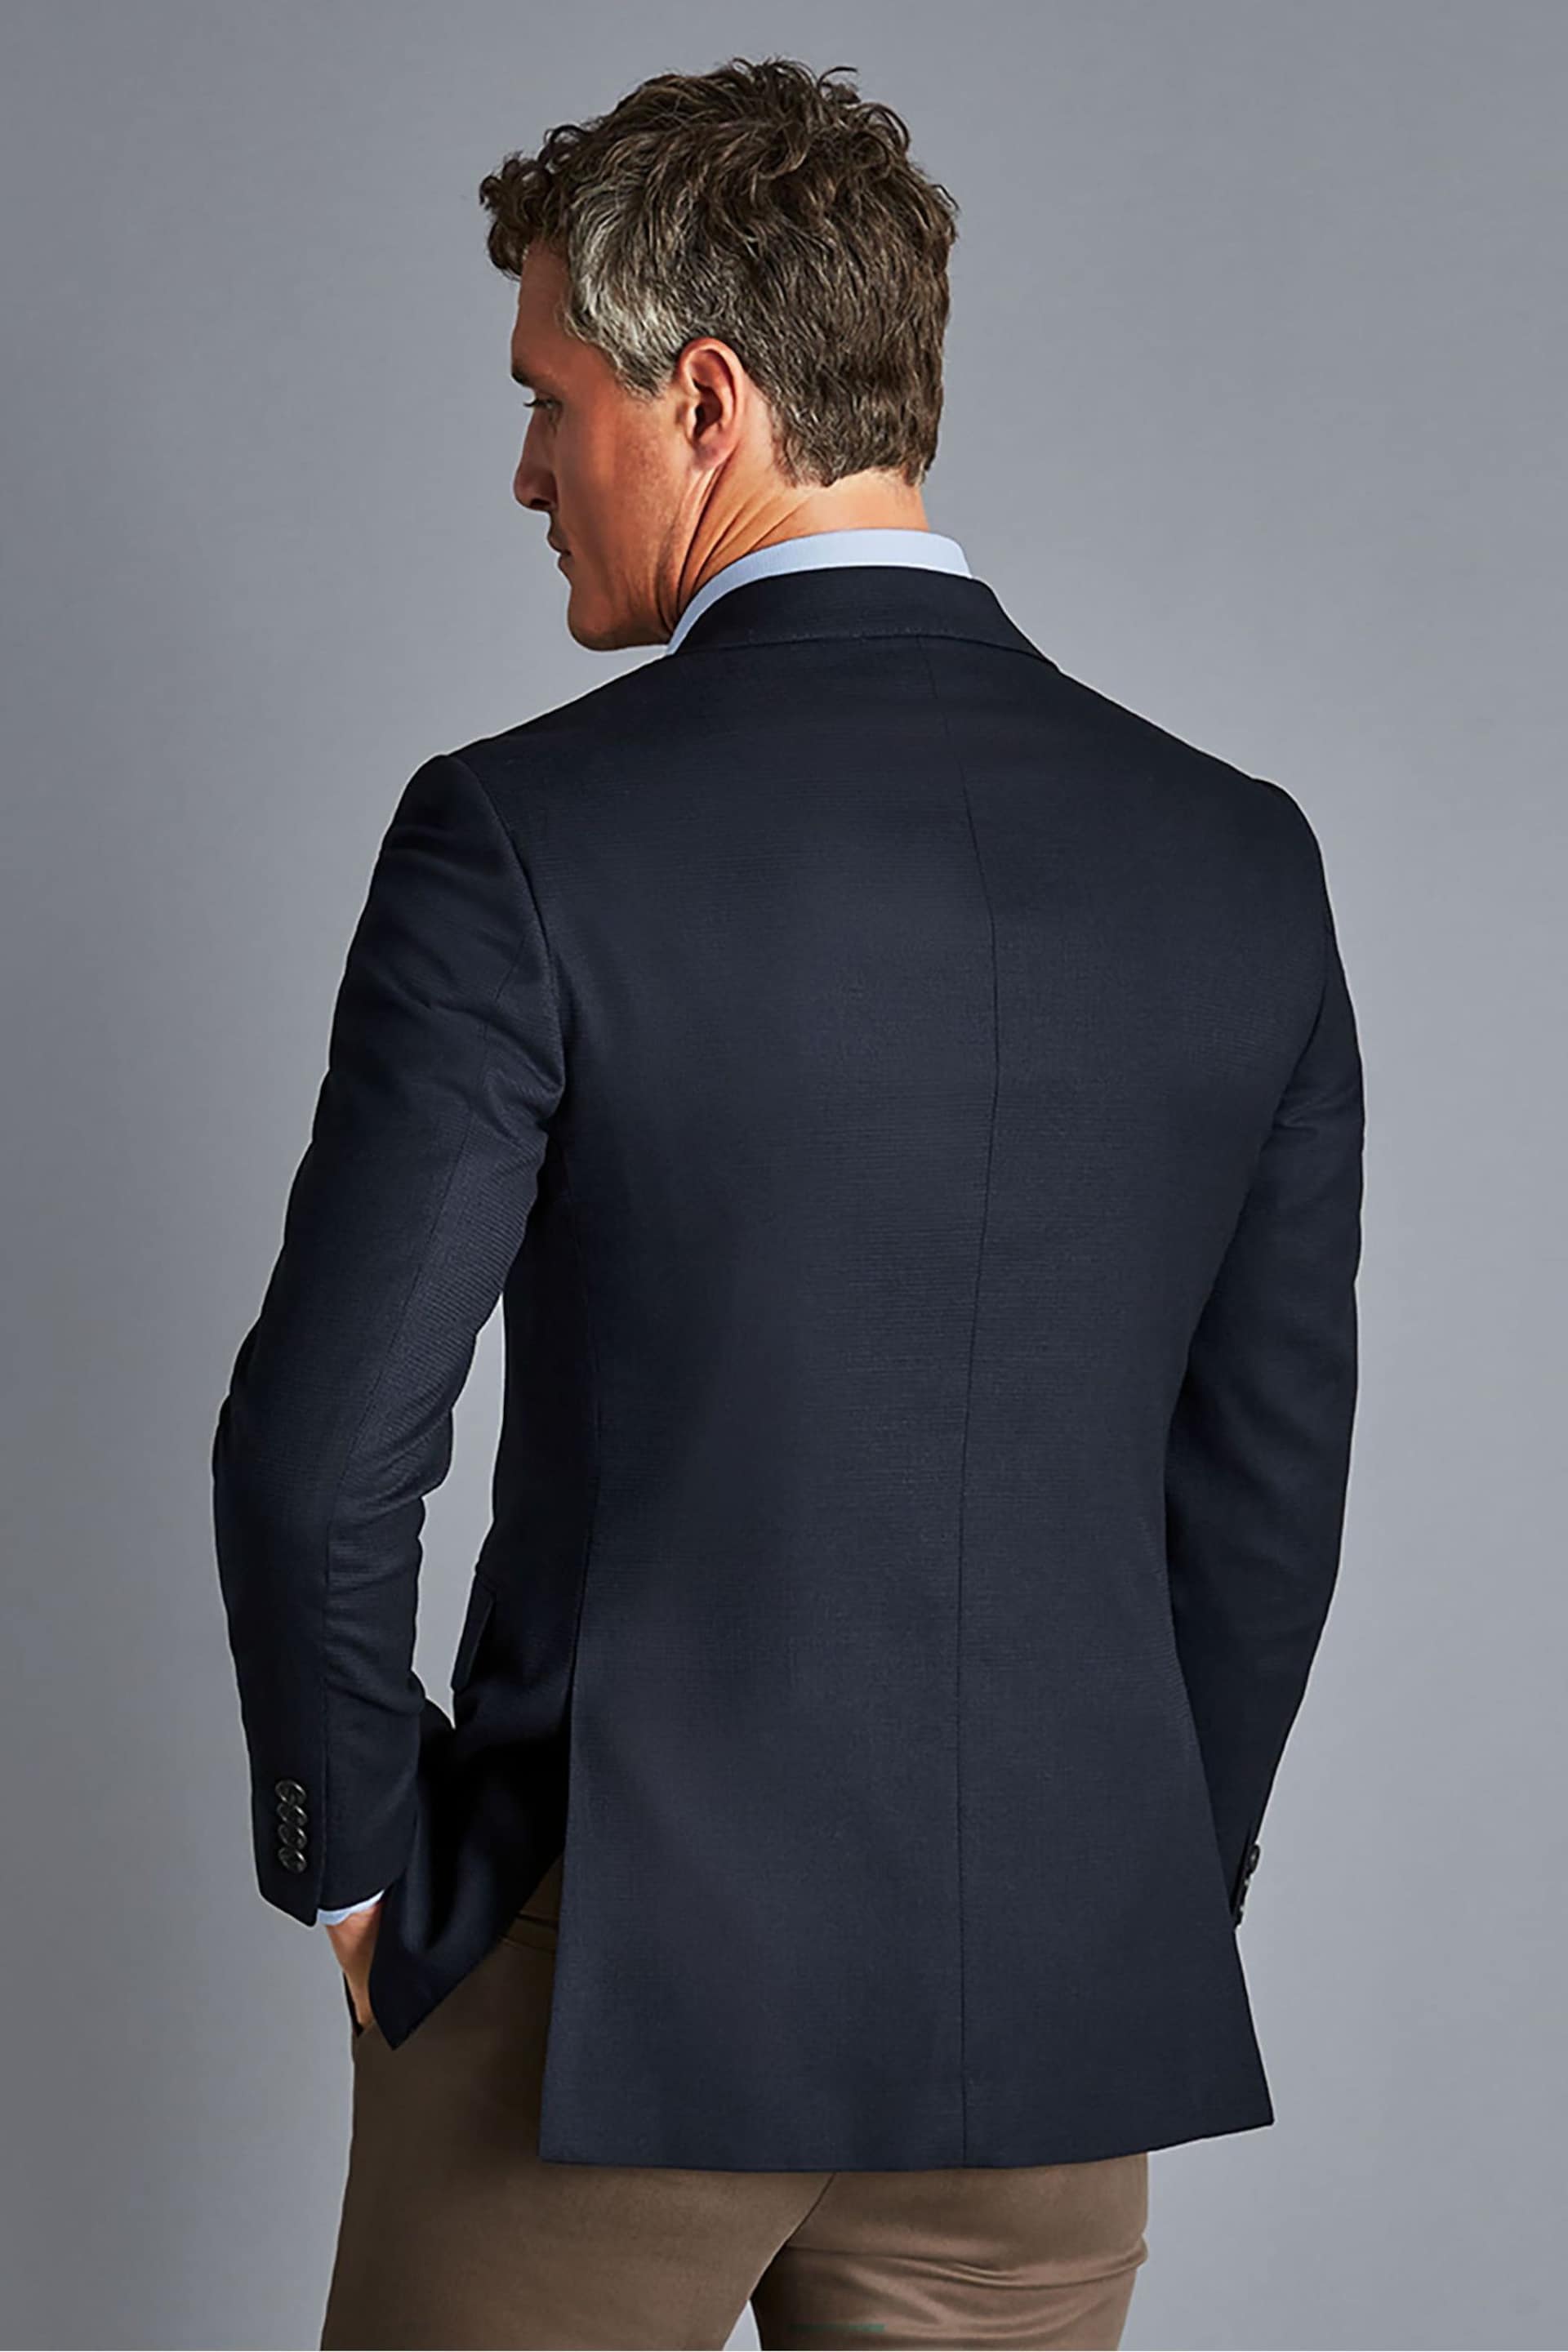 Charles Tyrwhitt Blue Proper Blazer Classic Fit Jacket - Image 2 of 4